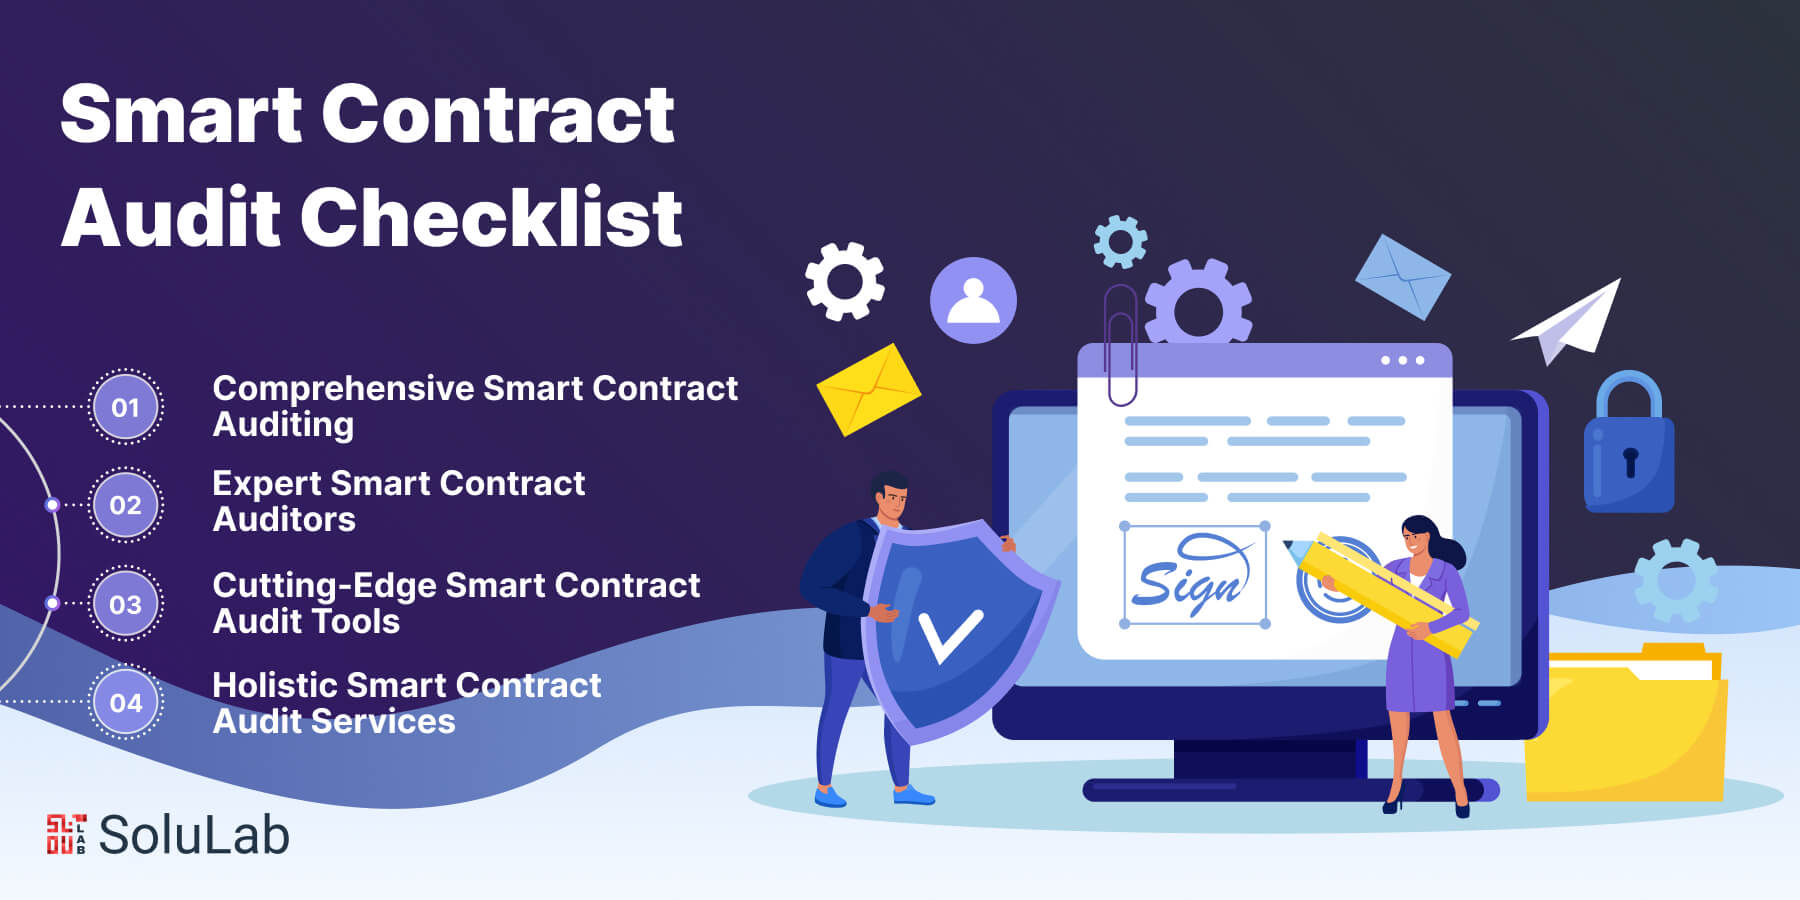 Smart Contract Audit Checklist